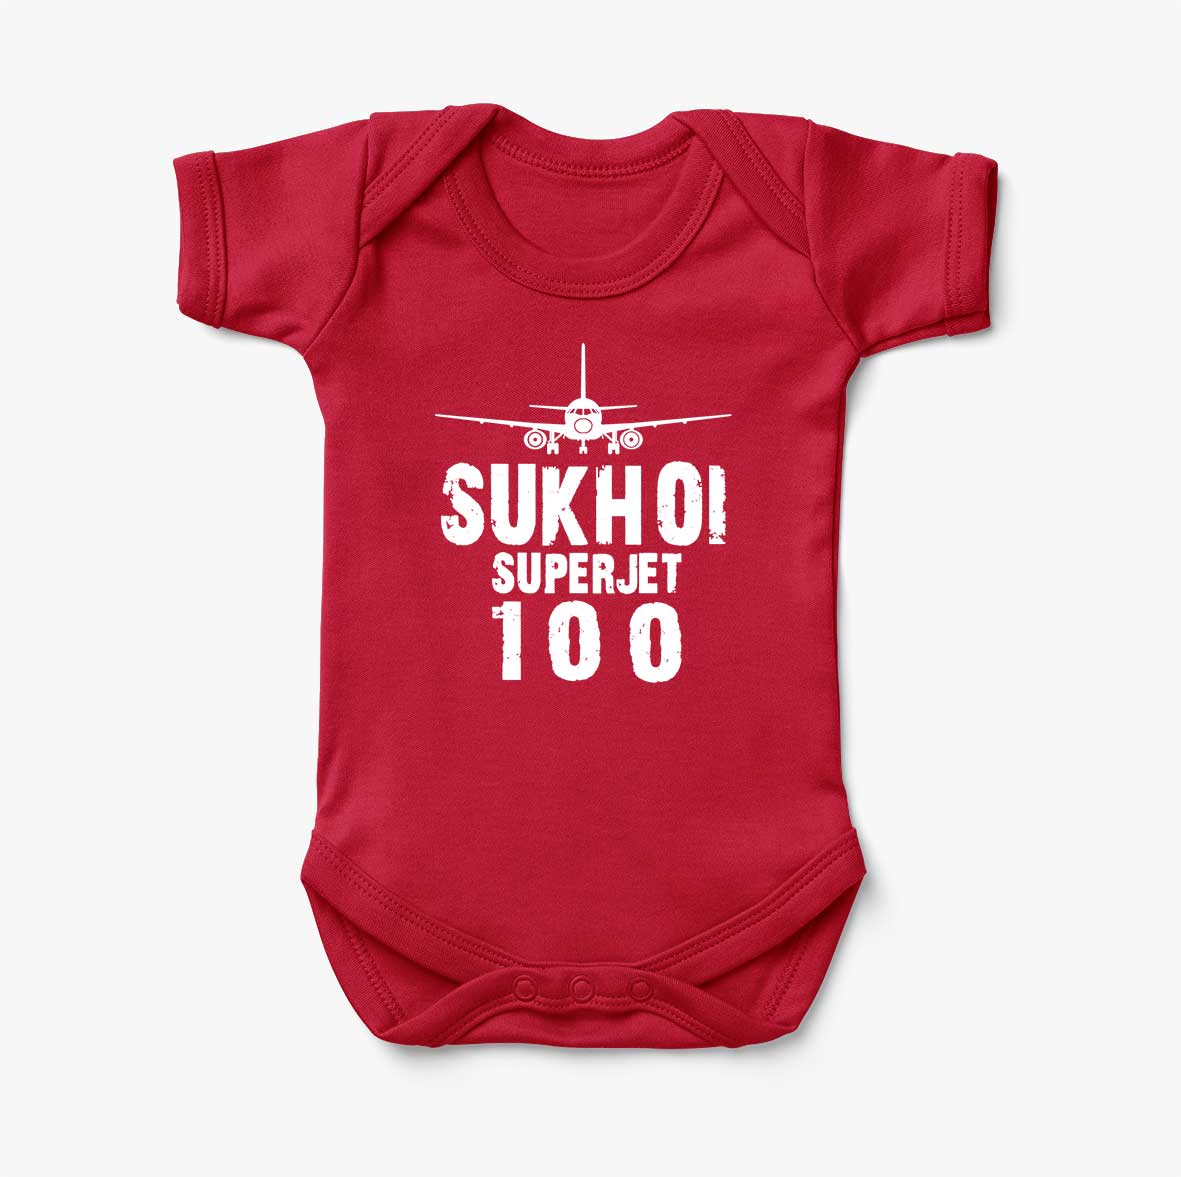 Sukhoi Superjet 100 & Plane Designed Baby Bodysuits